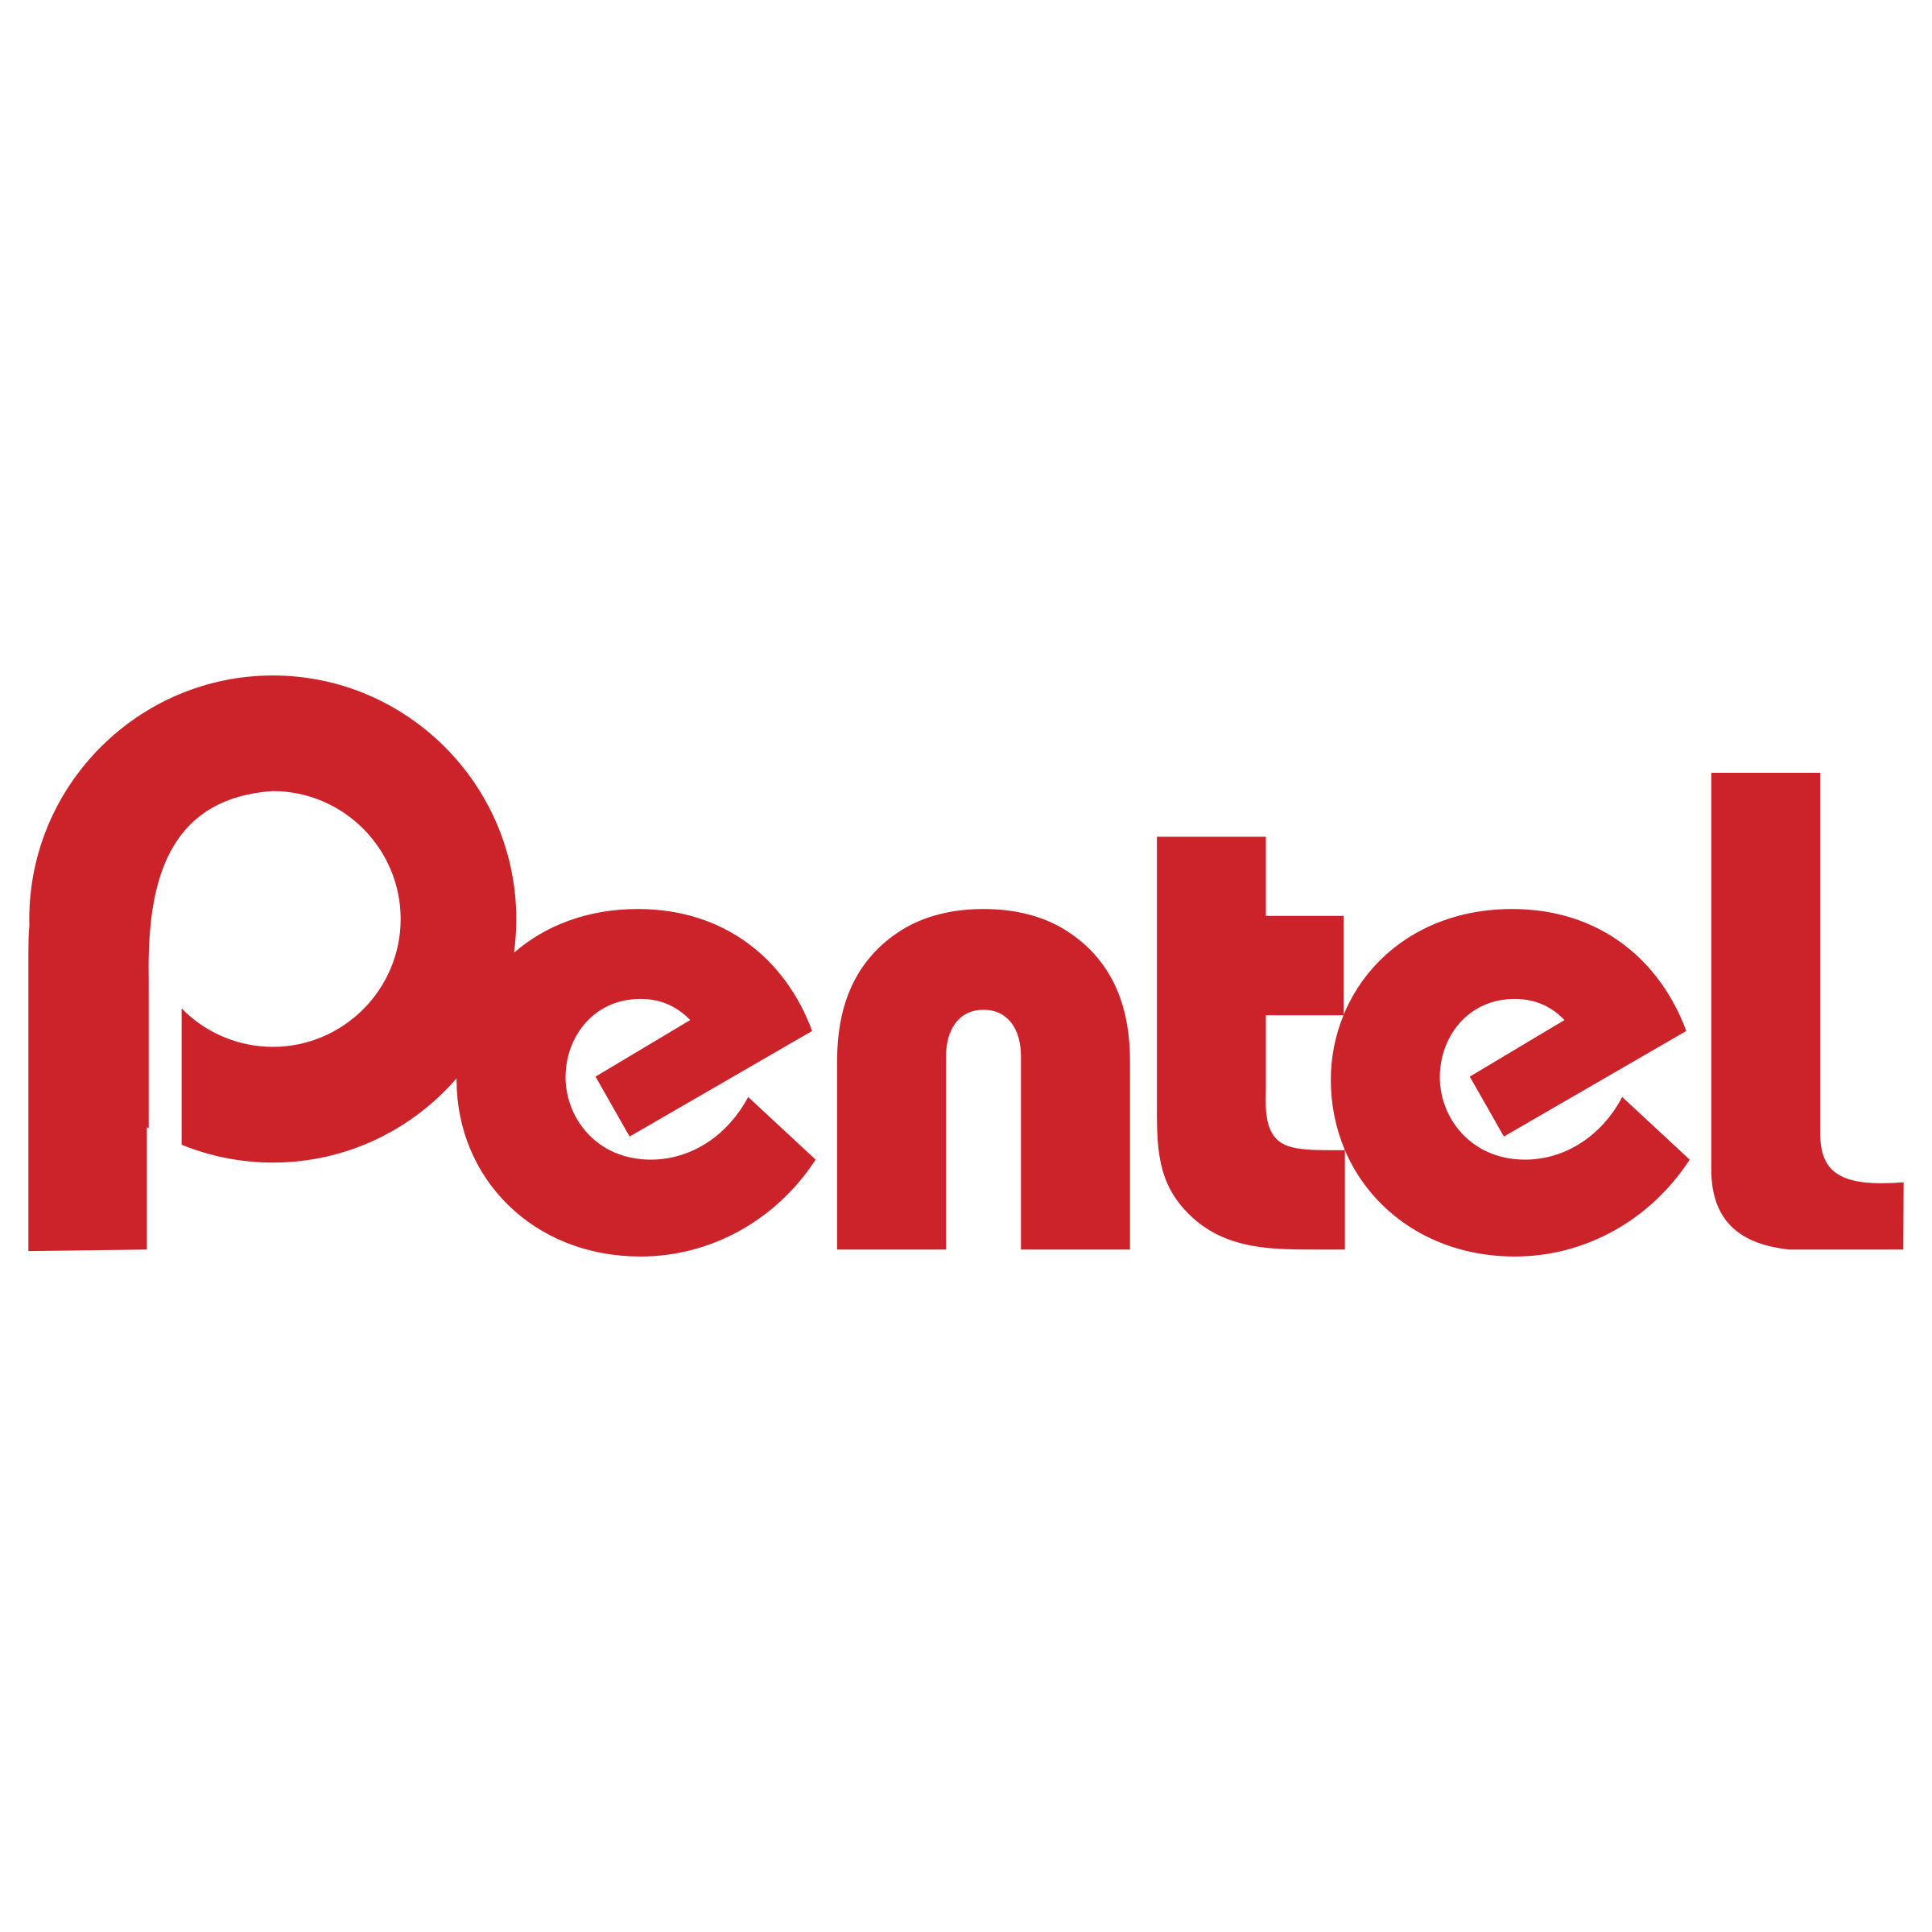 Pentel Logo - Pentel Logo PNG Transparent & SVG Vector - Freebie Supply